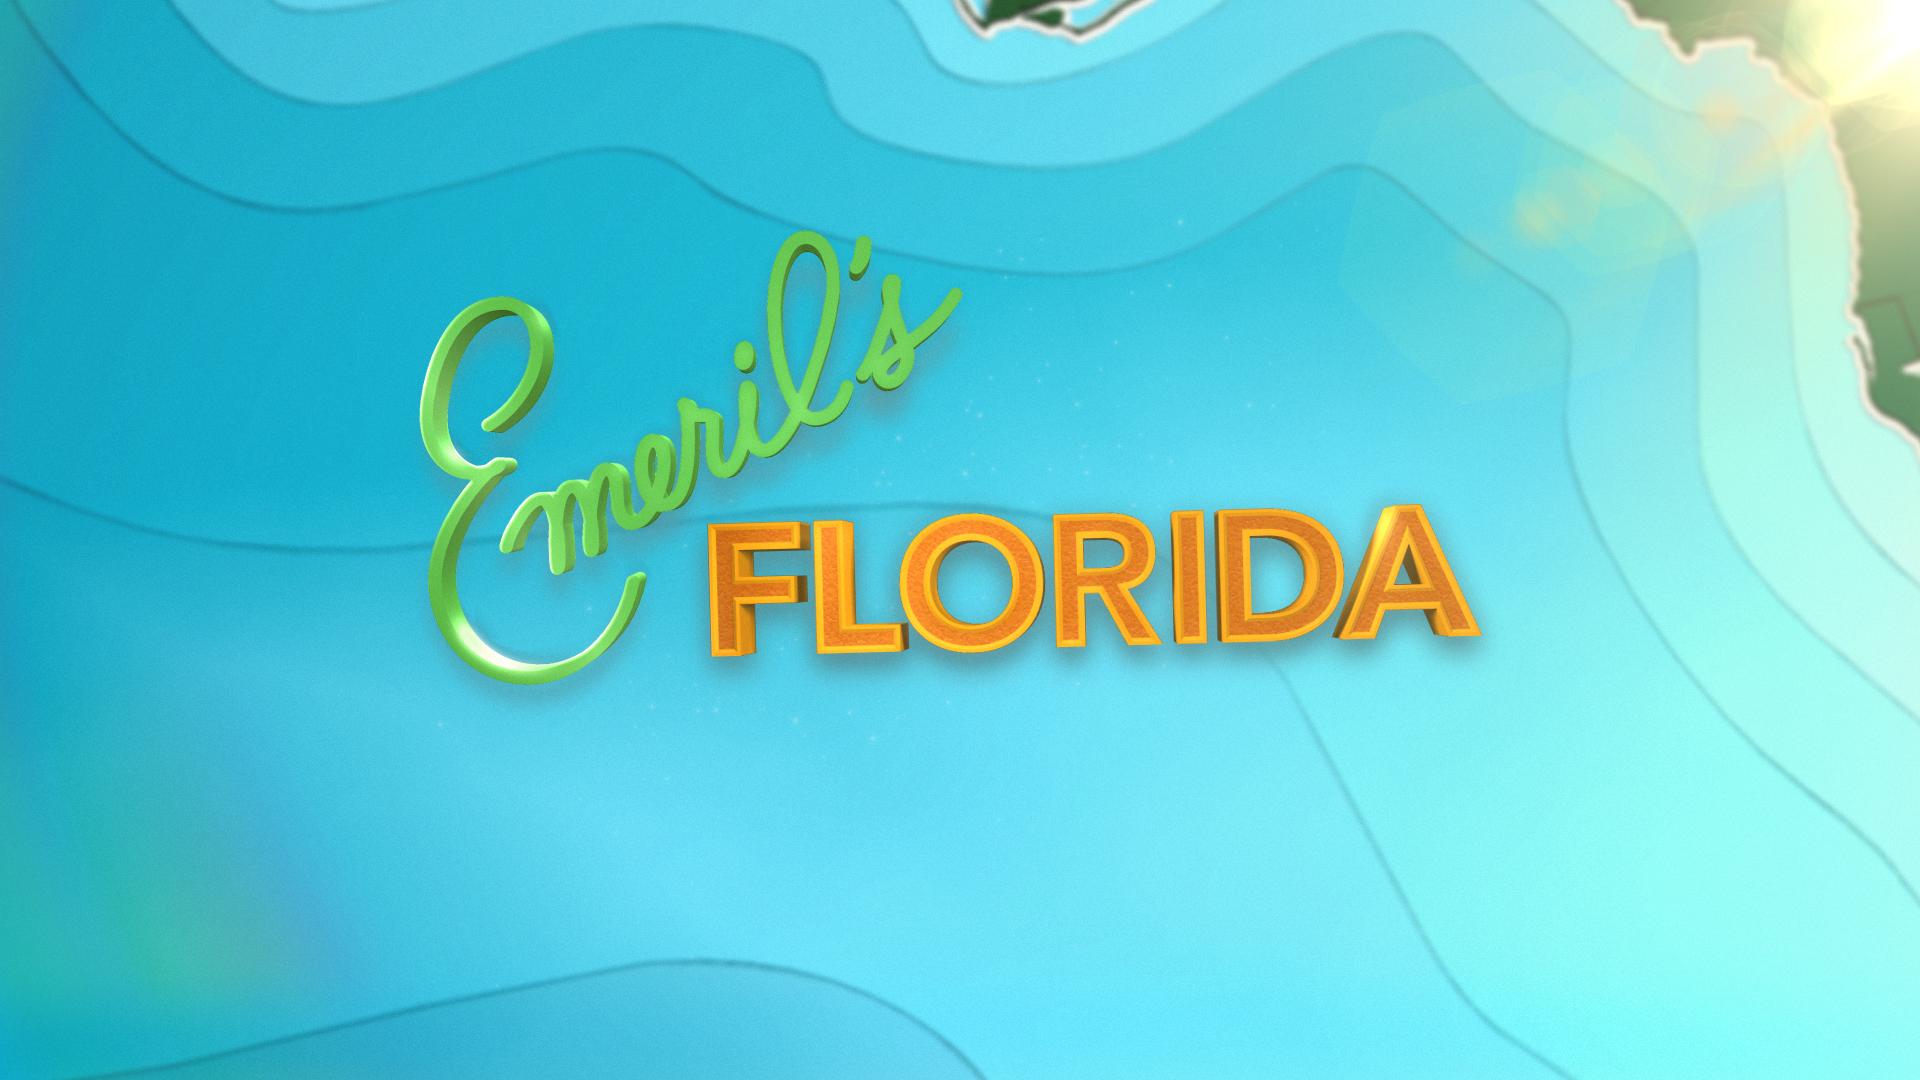 Emeril's Florida